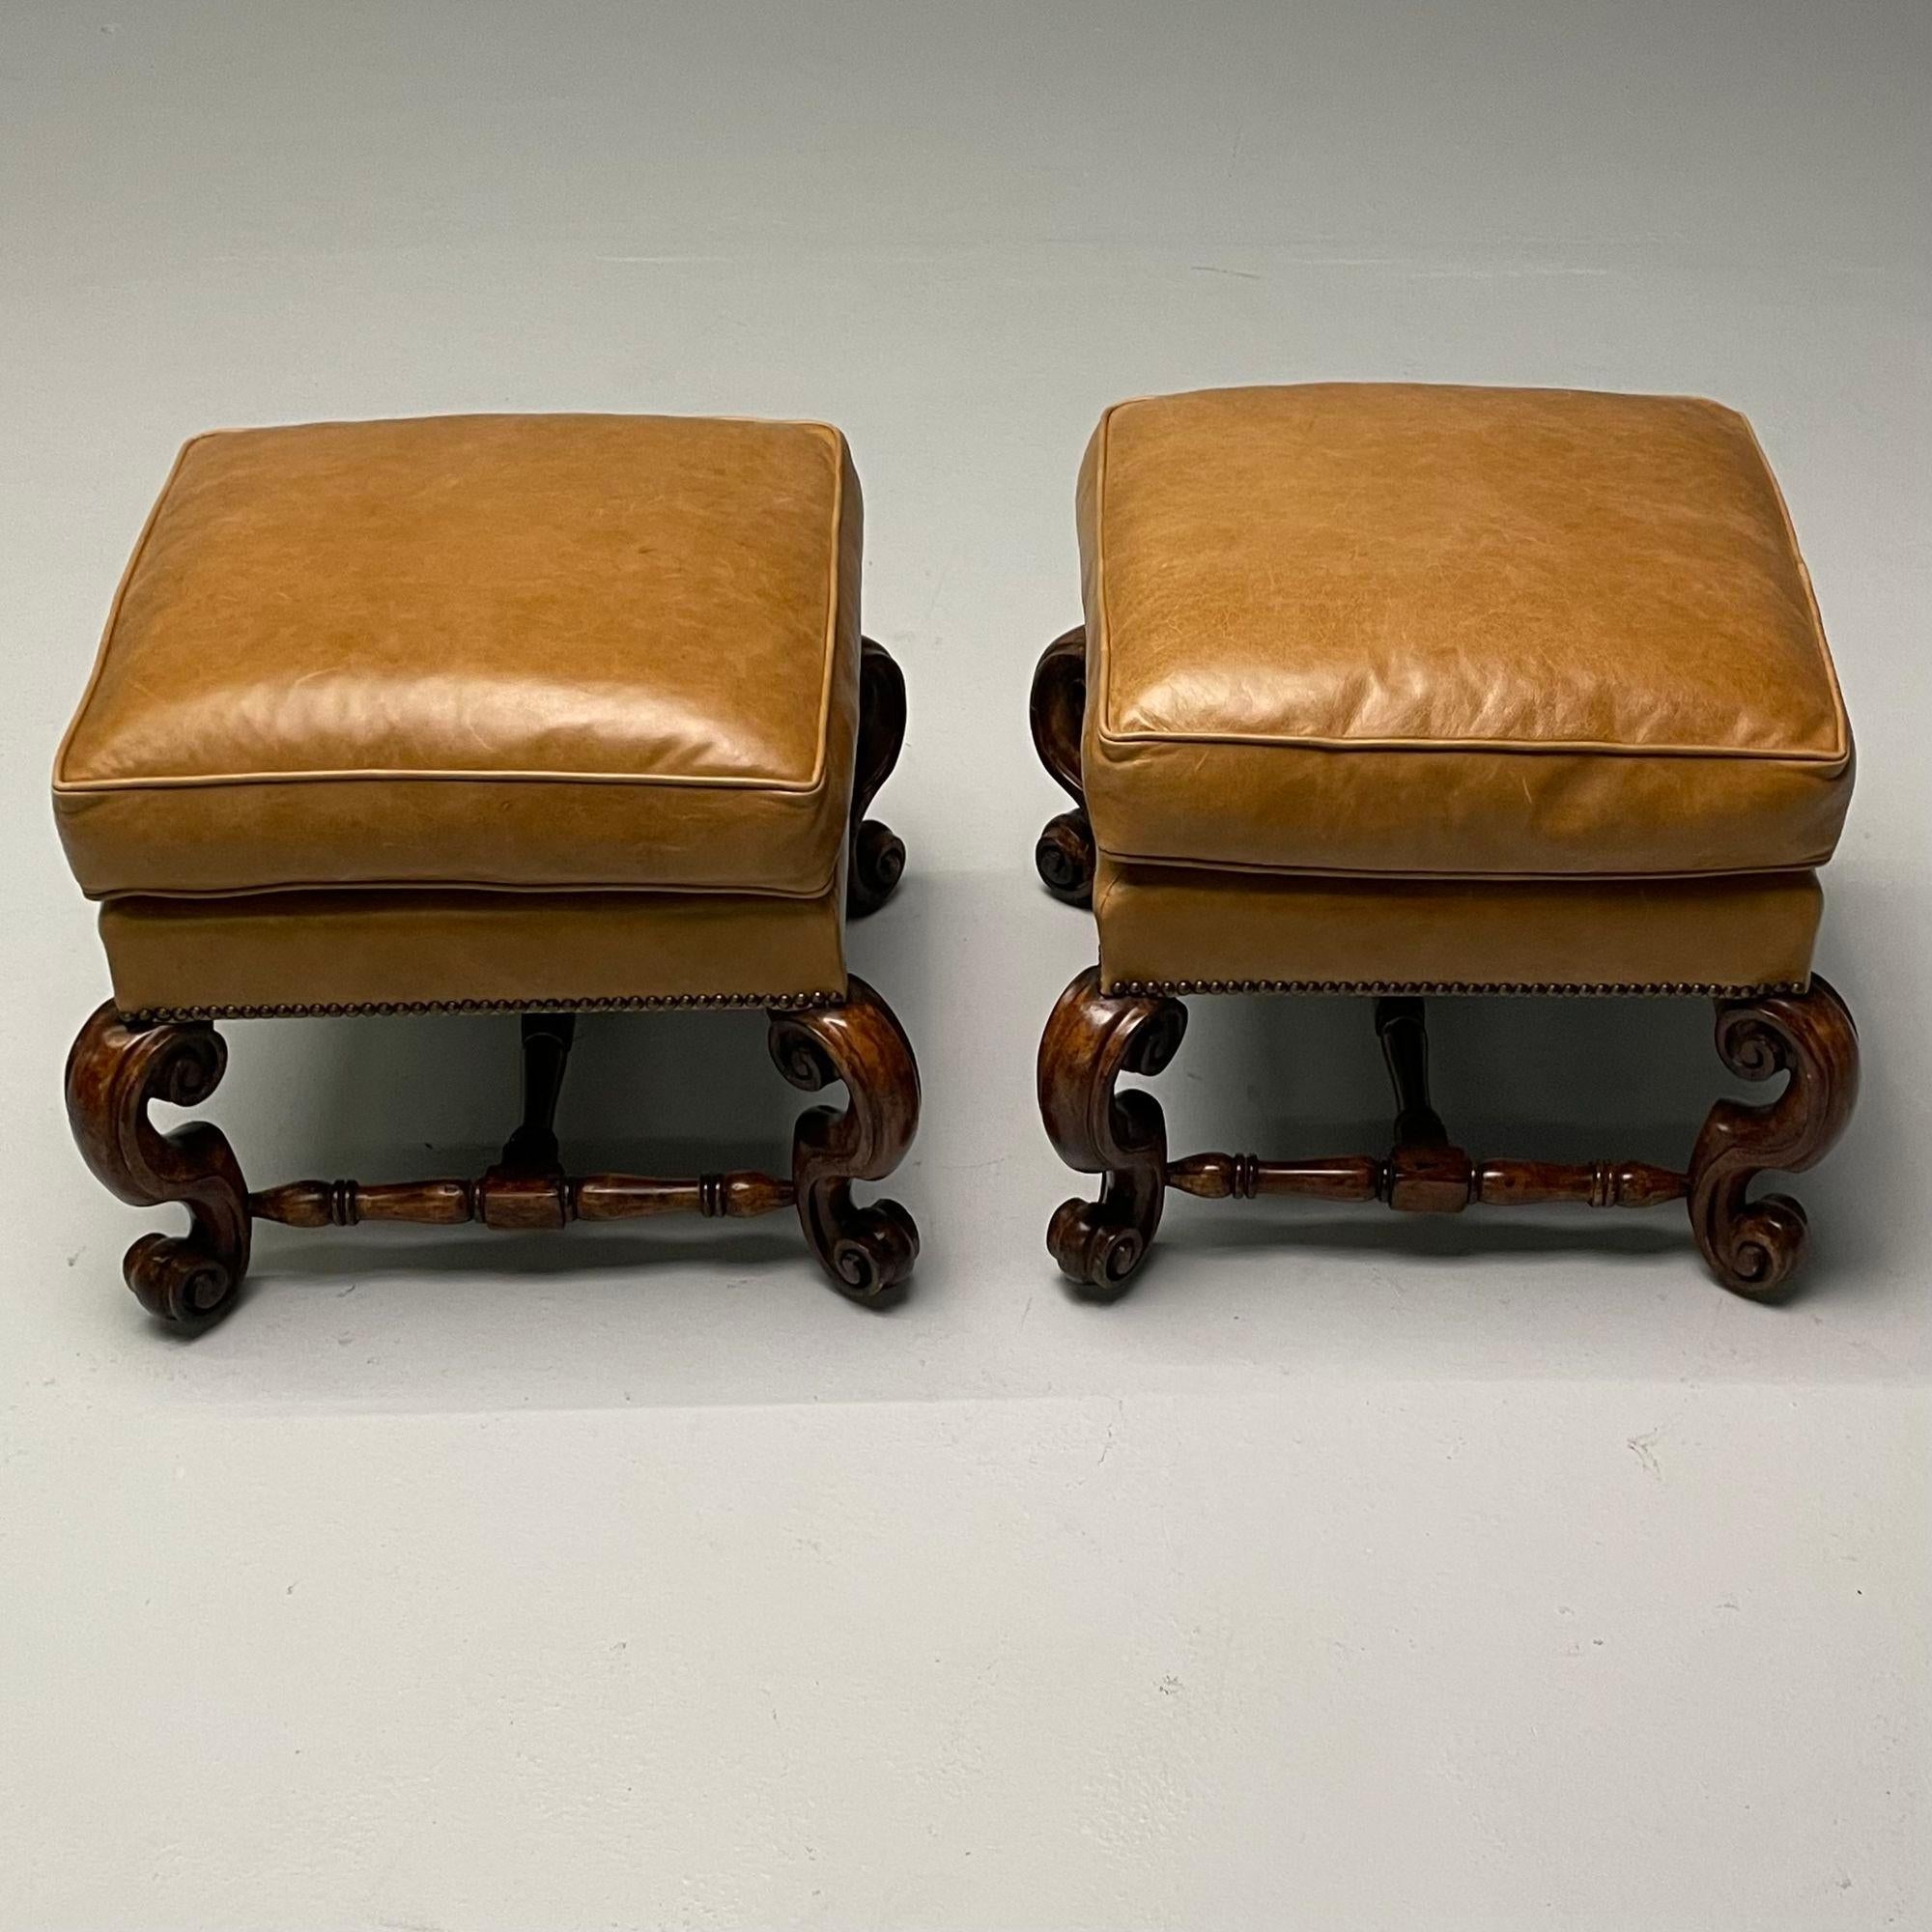 Georgian, Cabriole Leg Ottomans, Tan Leather, Wood, USA, 2000s For Sale 5